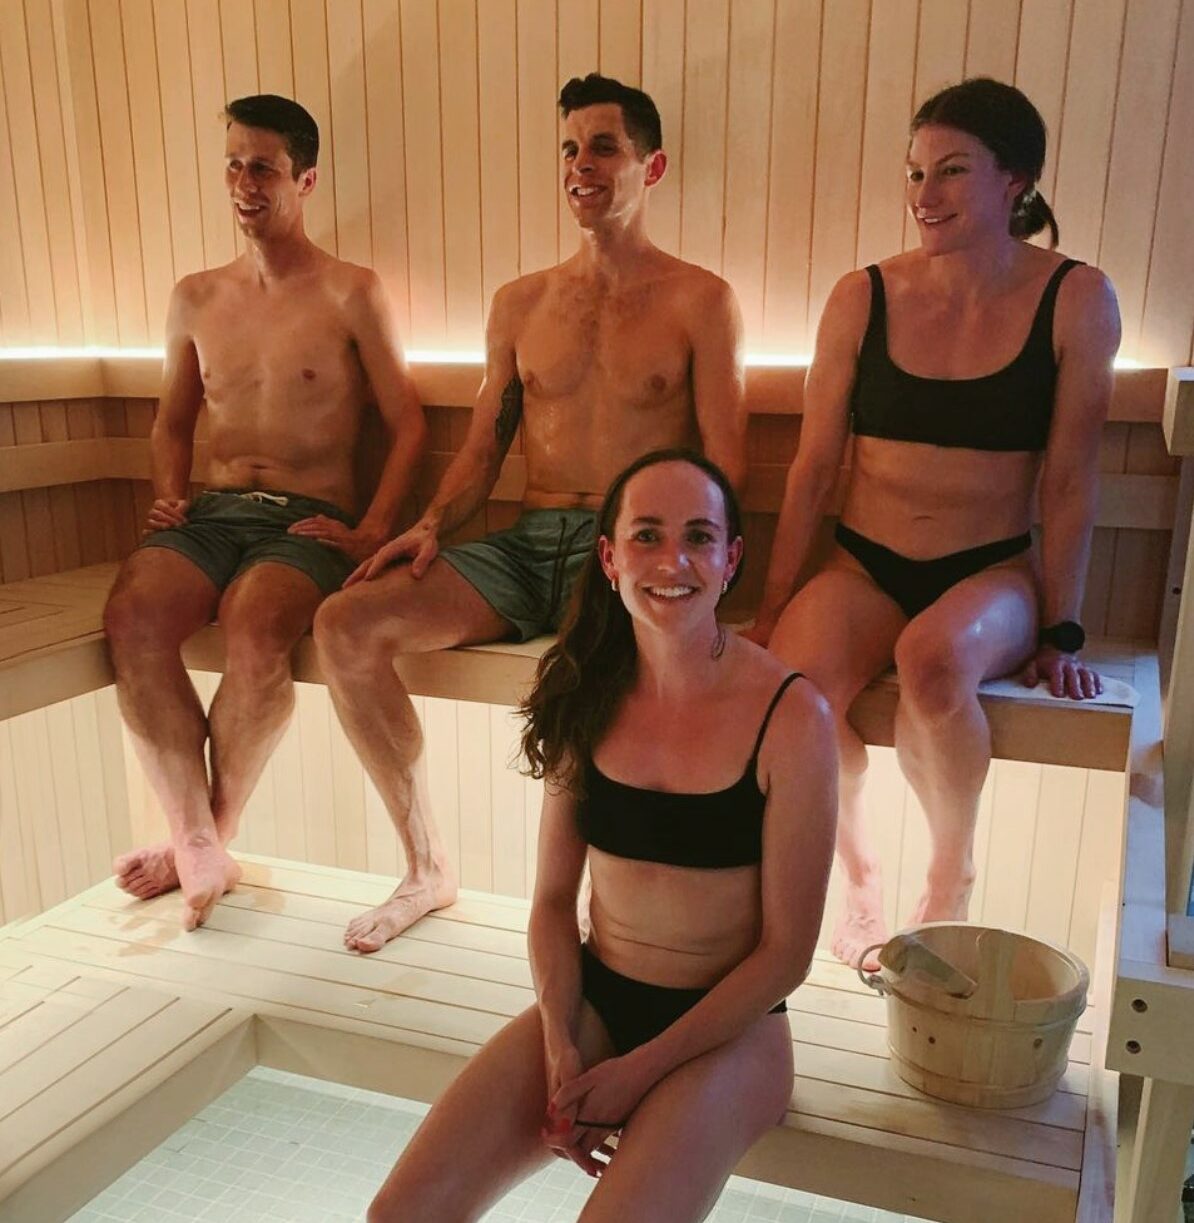 Group of people enjoying the Sauna at Ritual Nordic Spa's Sauna Circuit